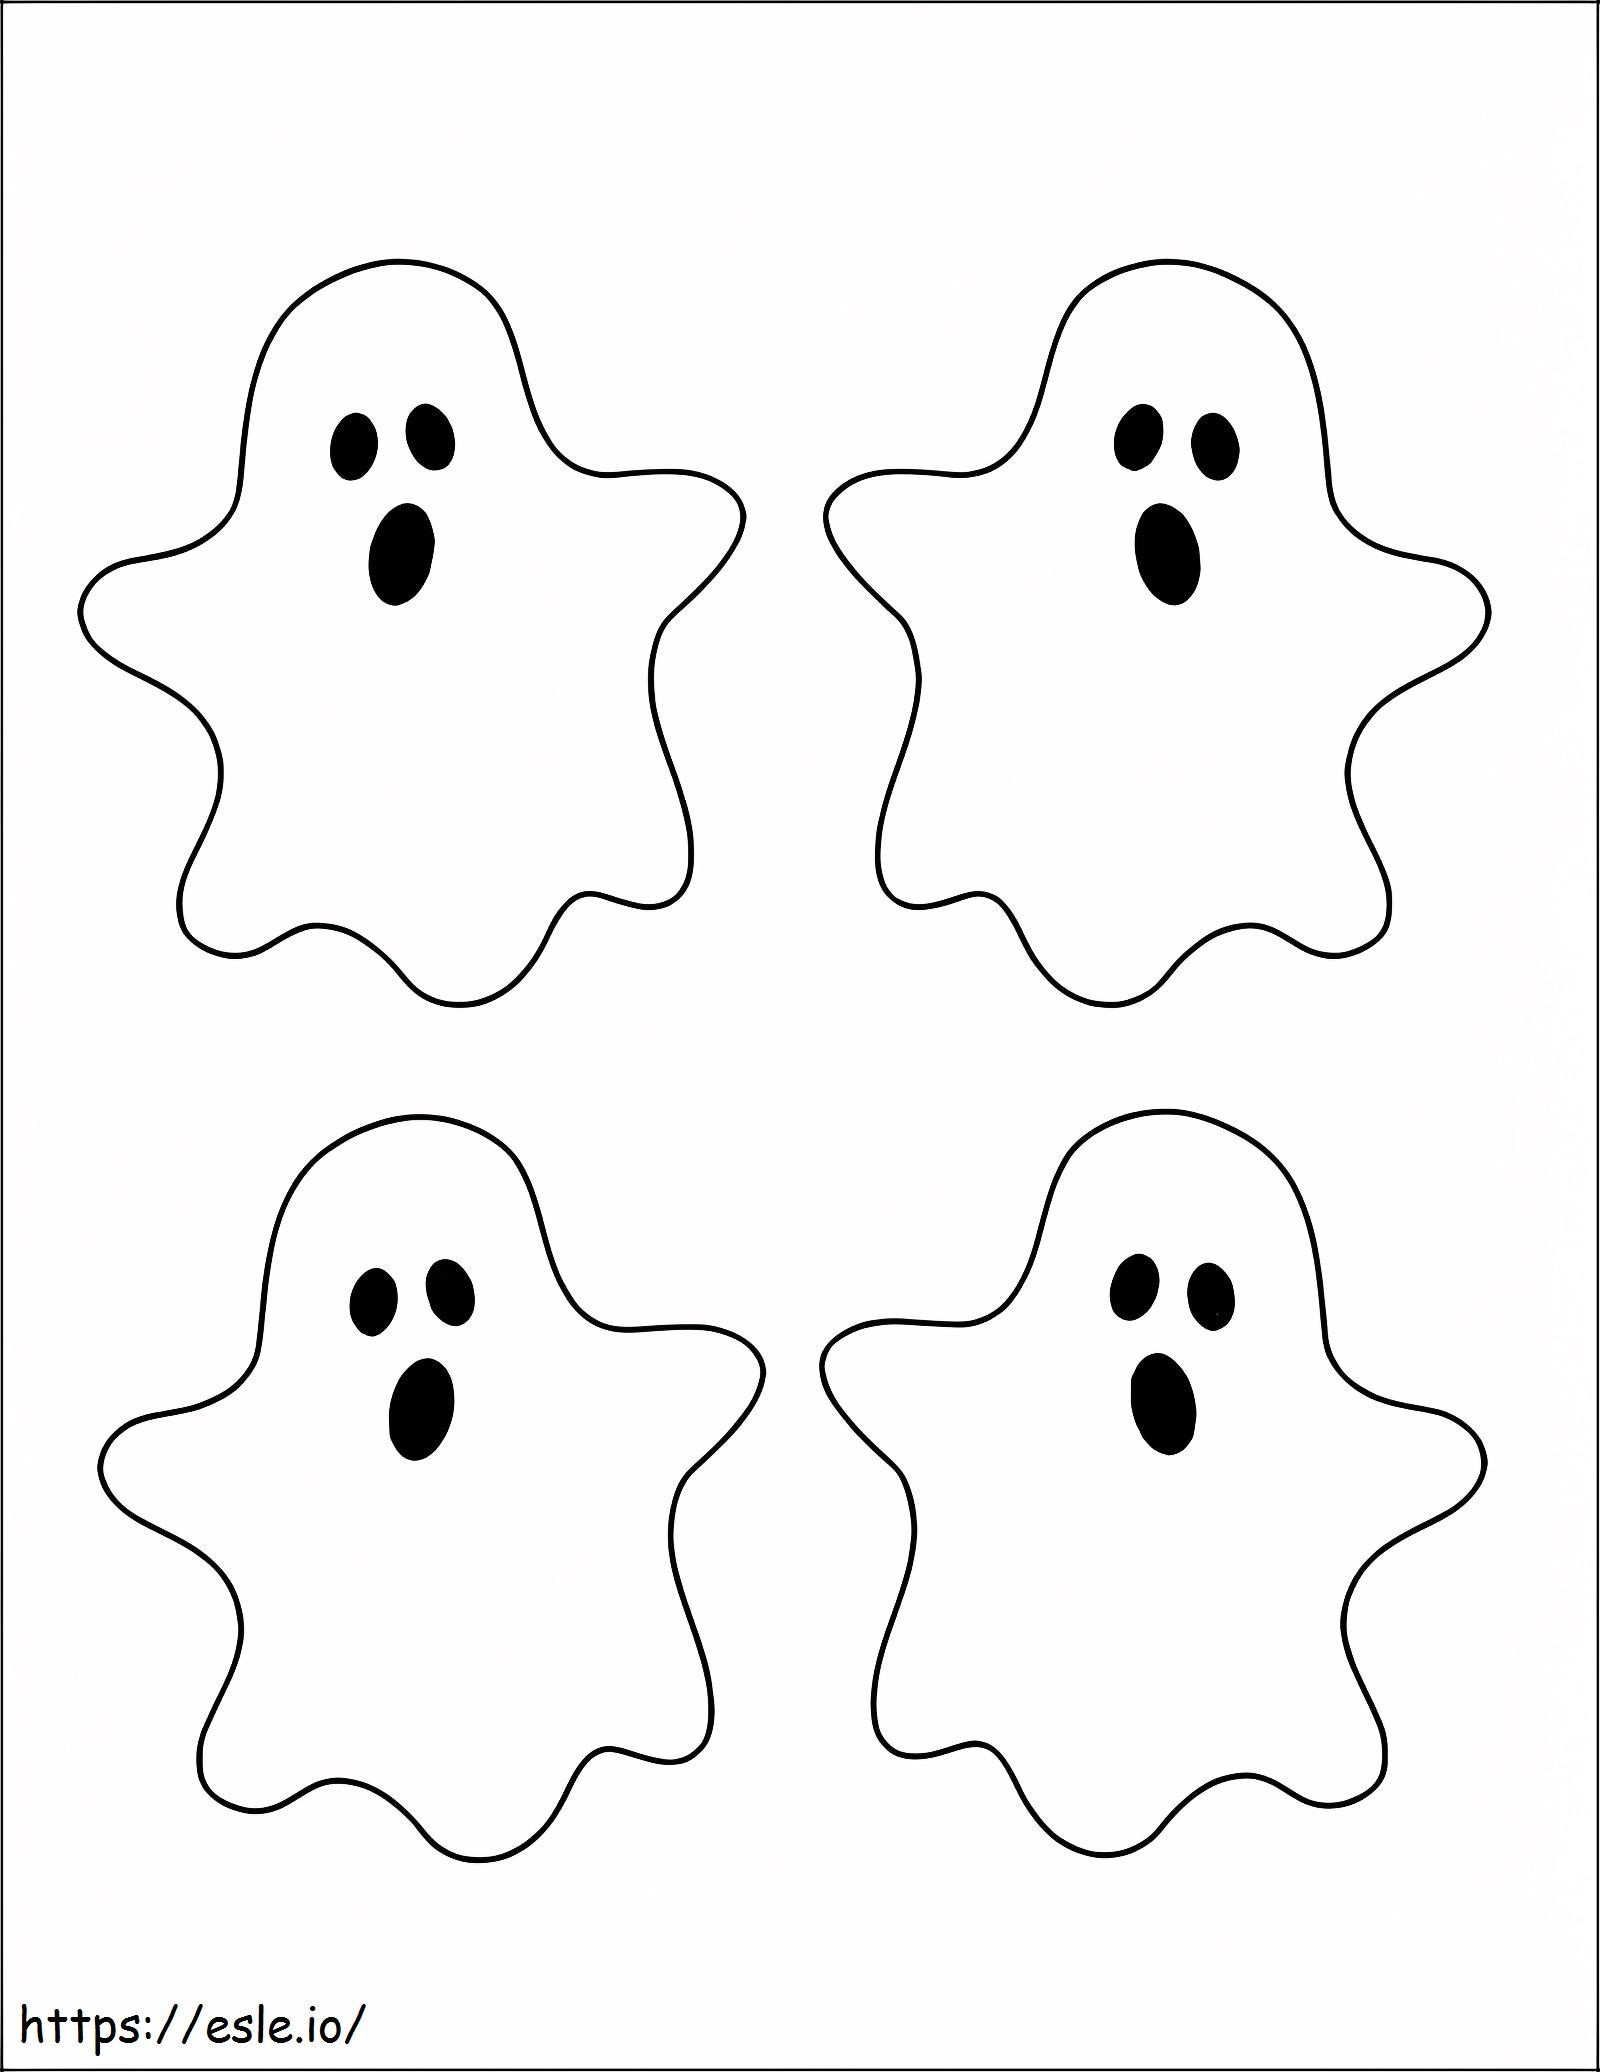 Quatro Fantasmas para colorir